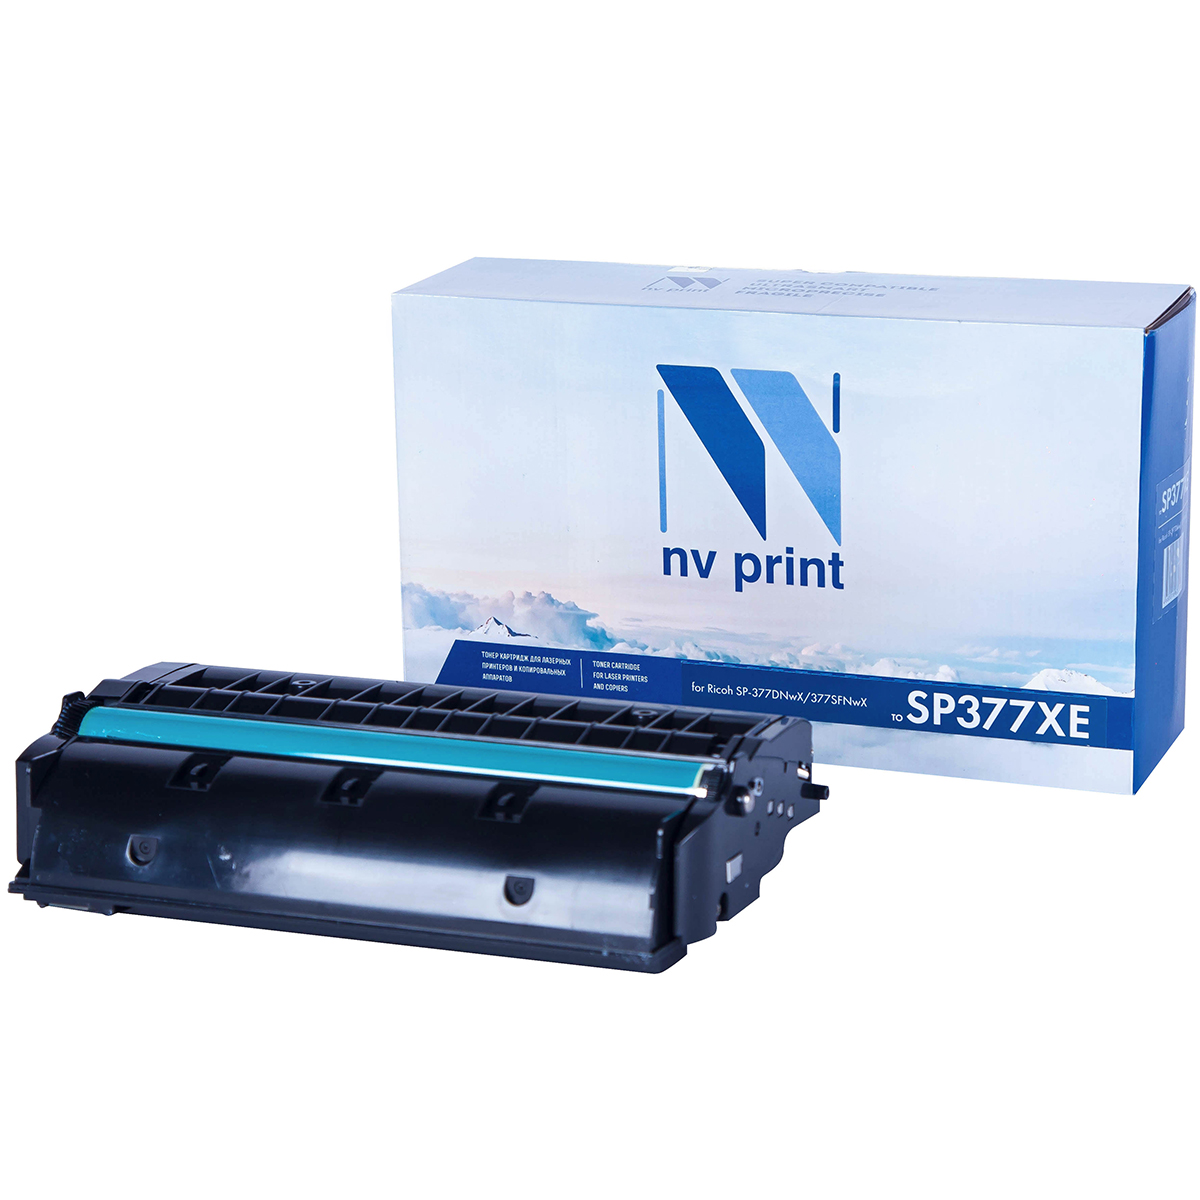 Картридж NV Print SP377XE для Ricoh SP-377DNwX/377SFNwX (6400k) картридж solution print sp h cf352a y совместимый